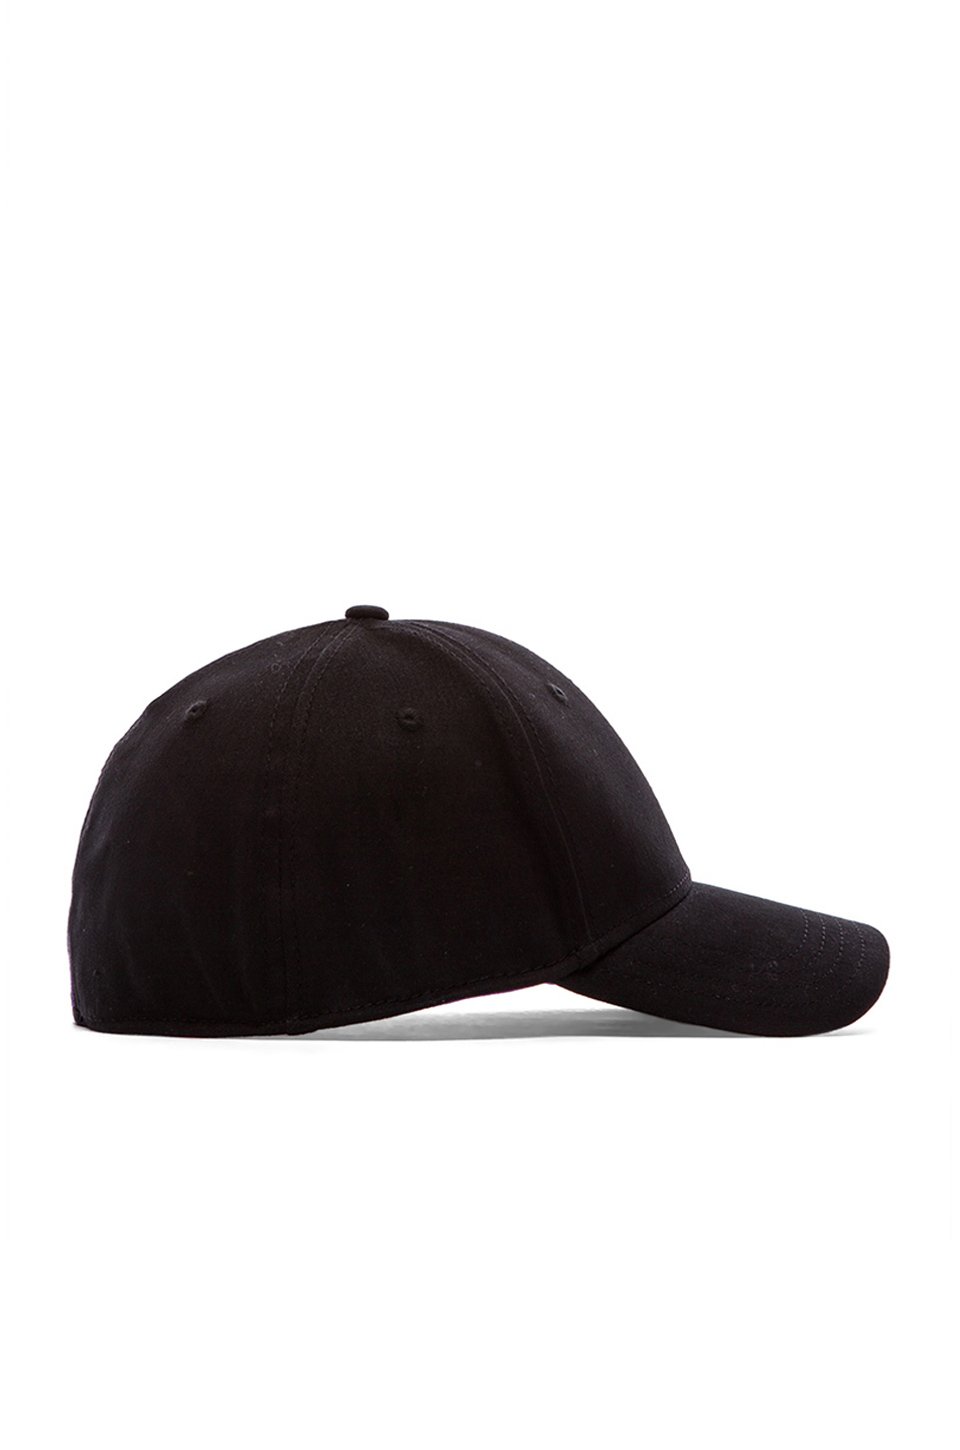 Gents Co. Cotton Director's Cap in Black for Men - Lyst